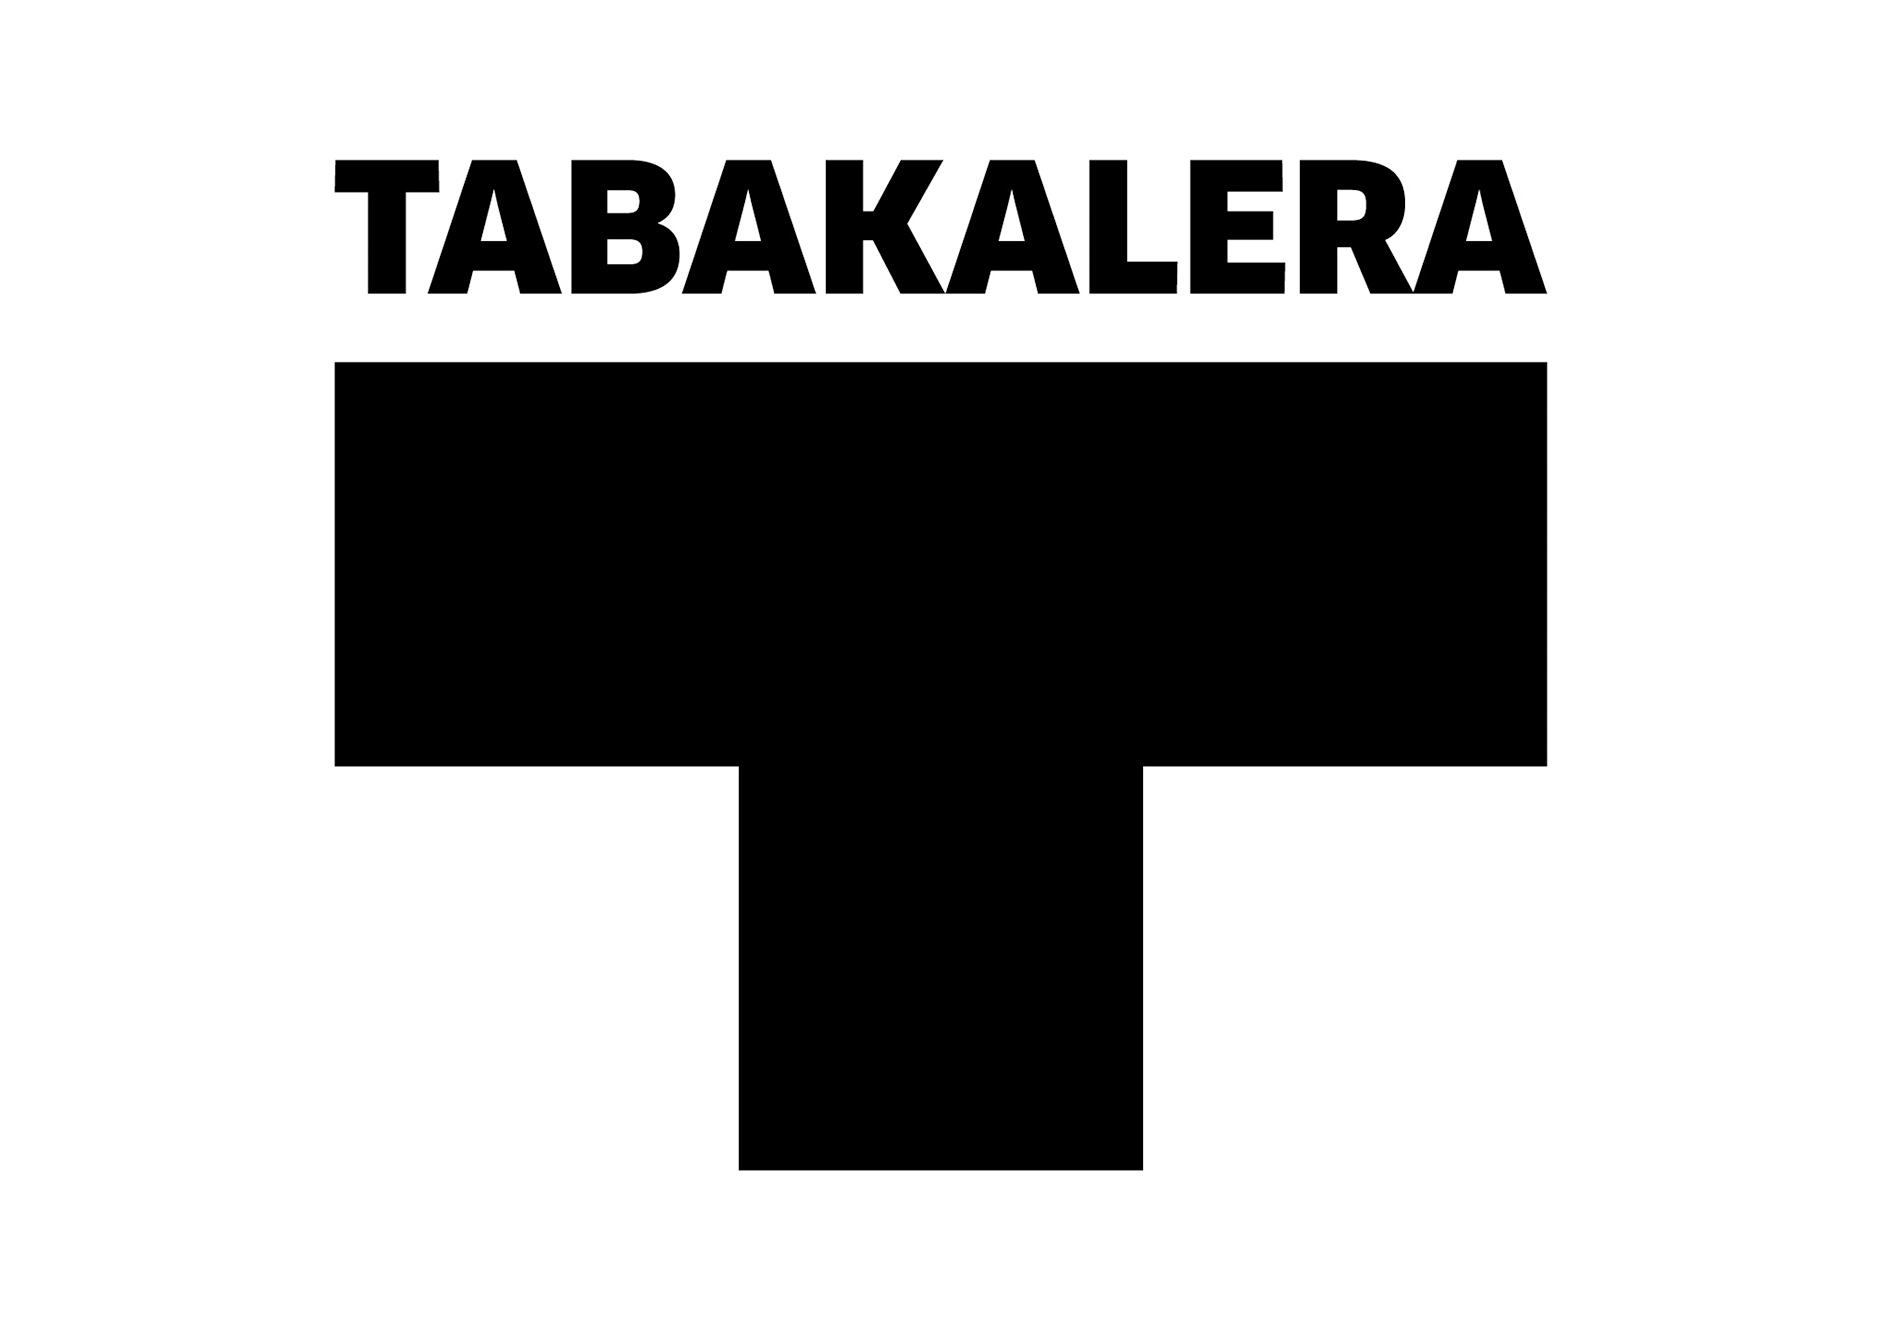 Tabakalera